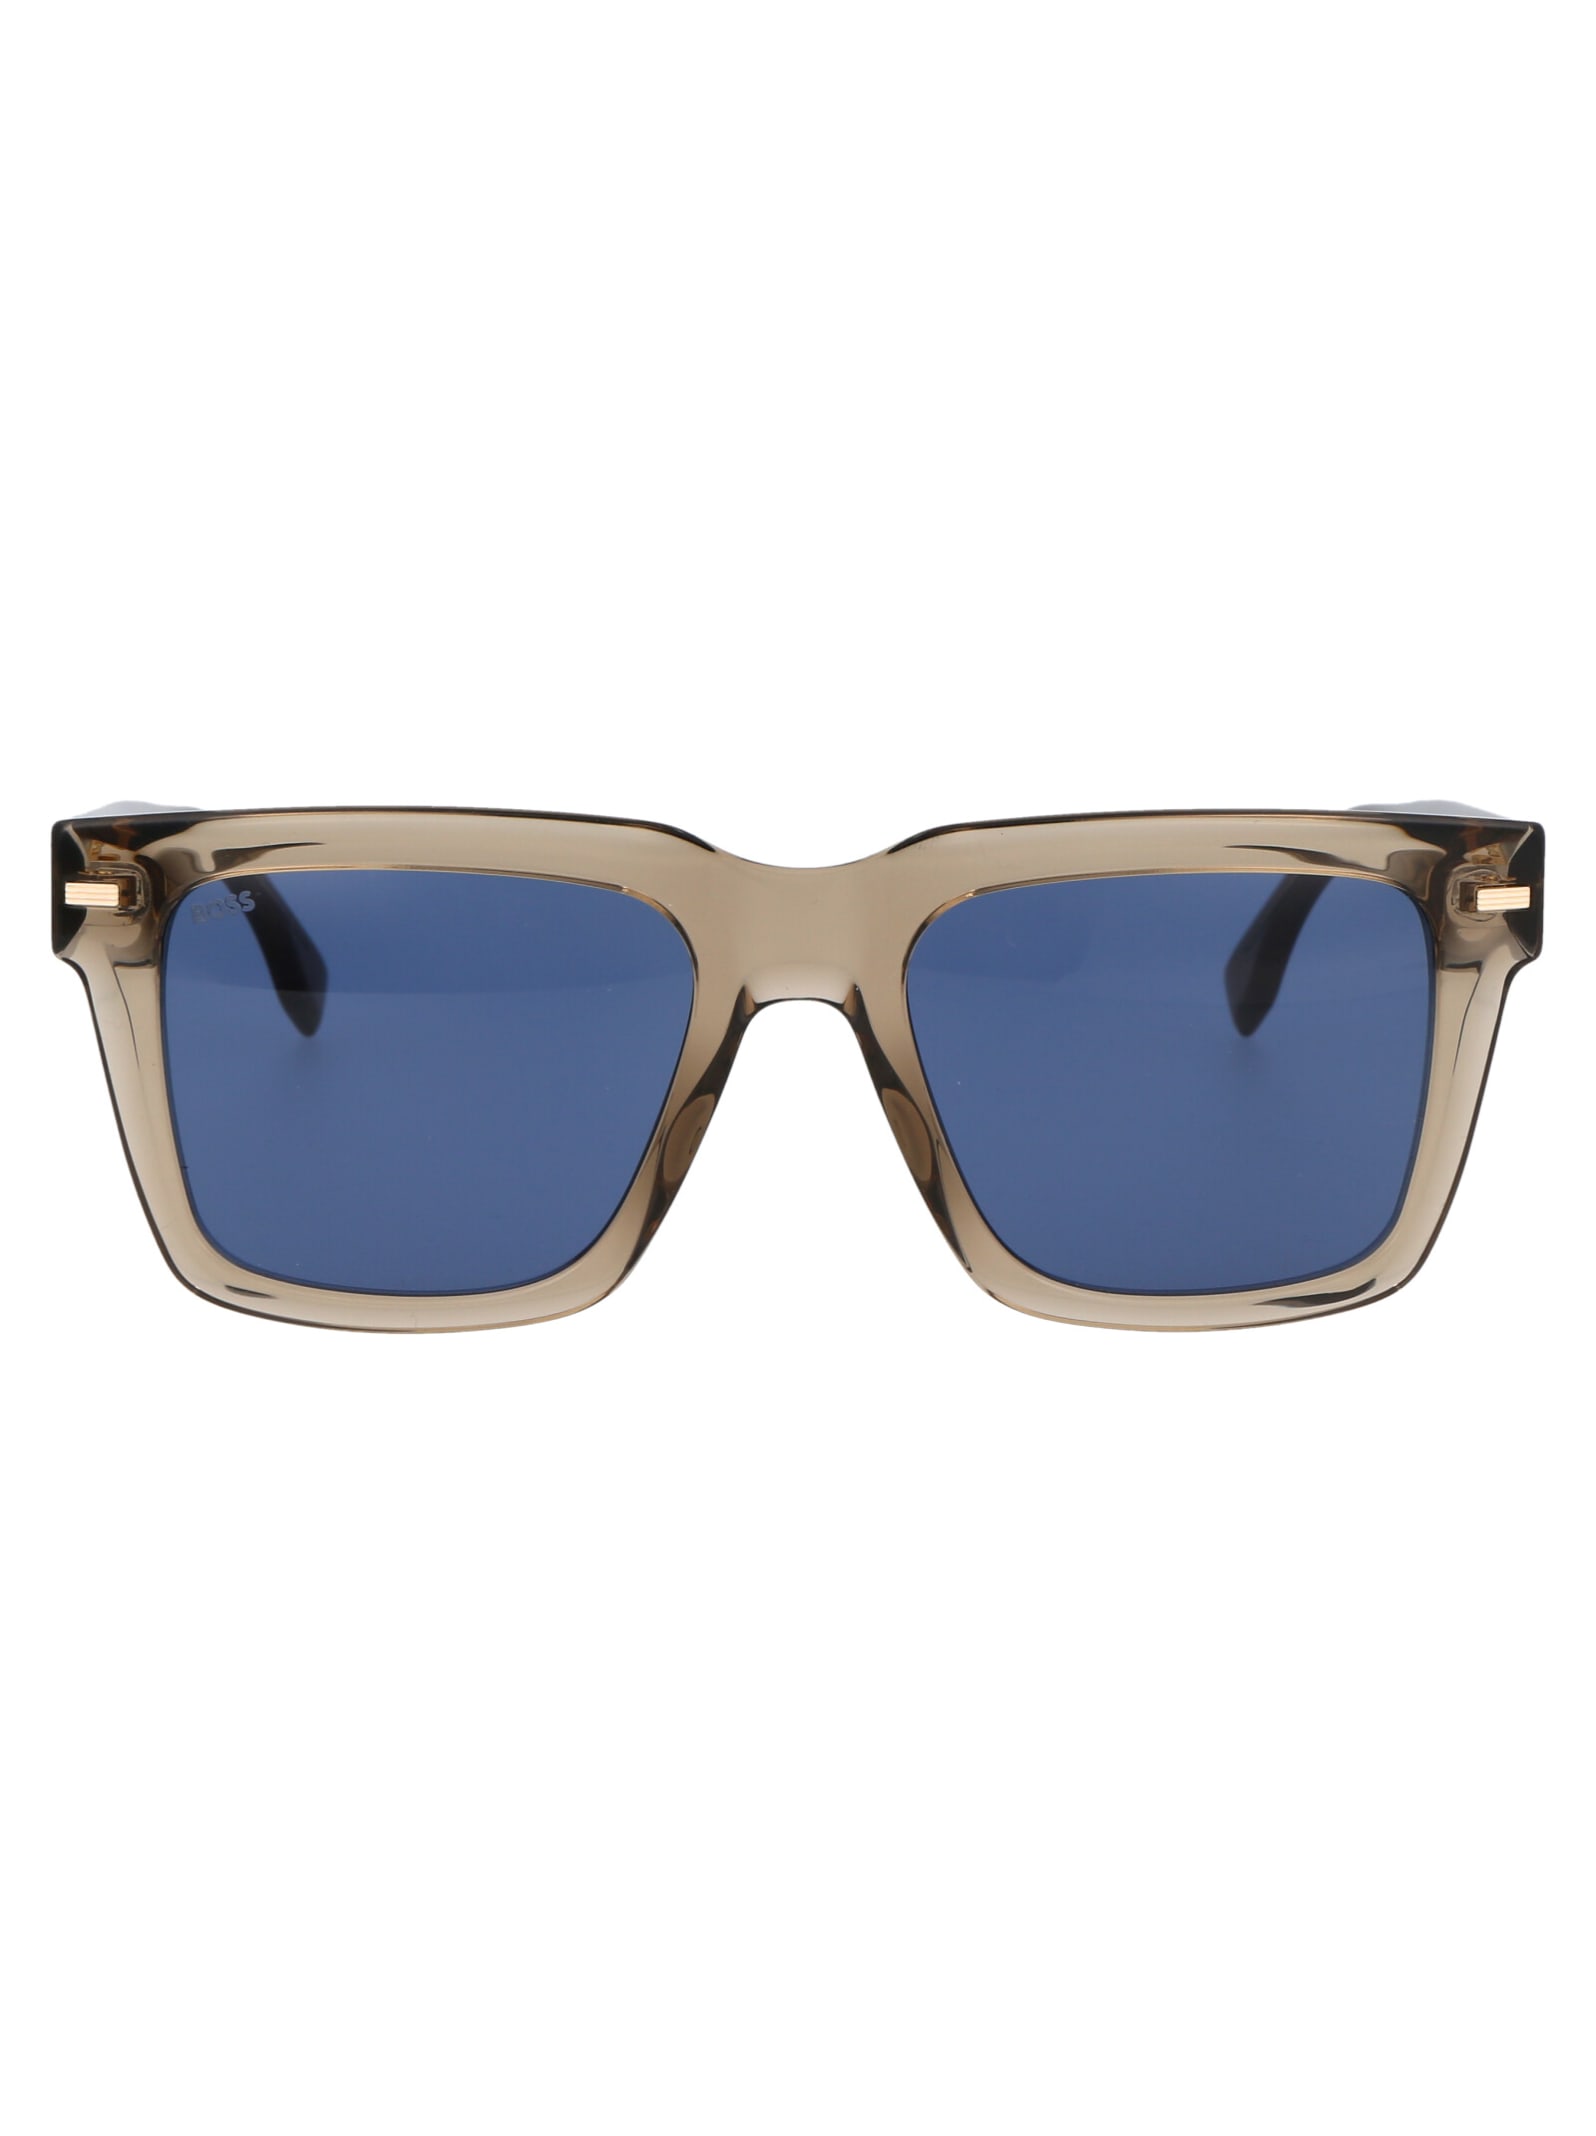 Boss 1442/s Sunglasses